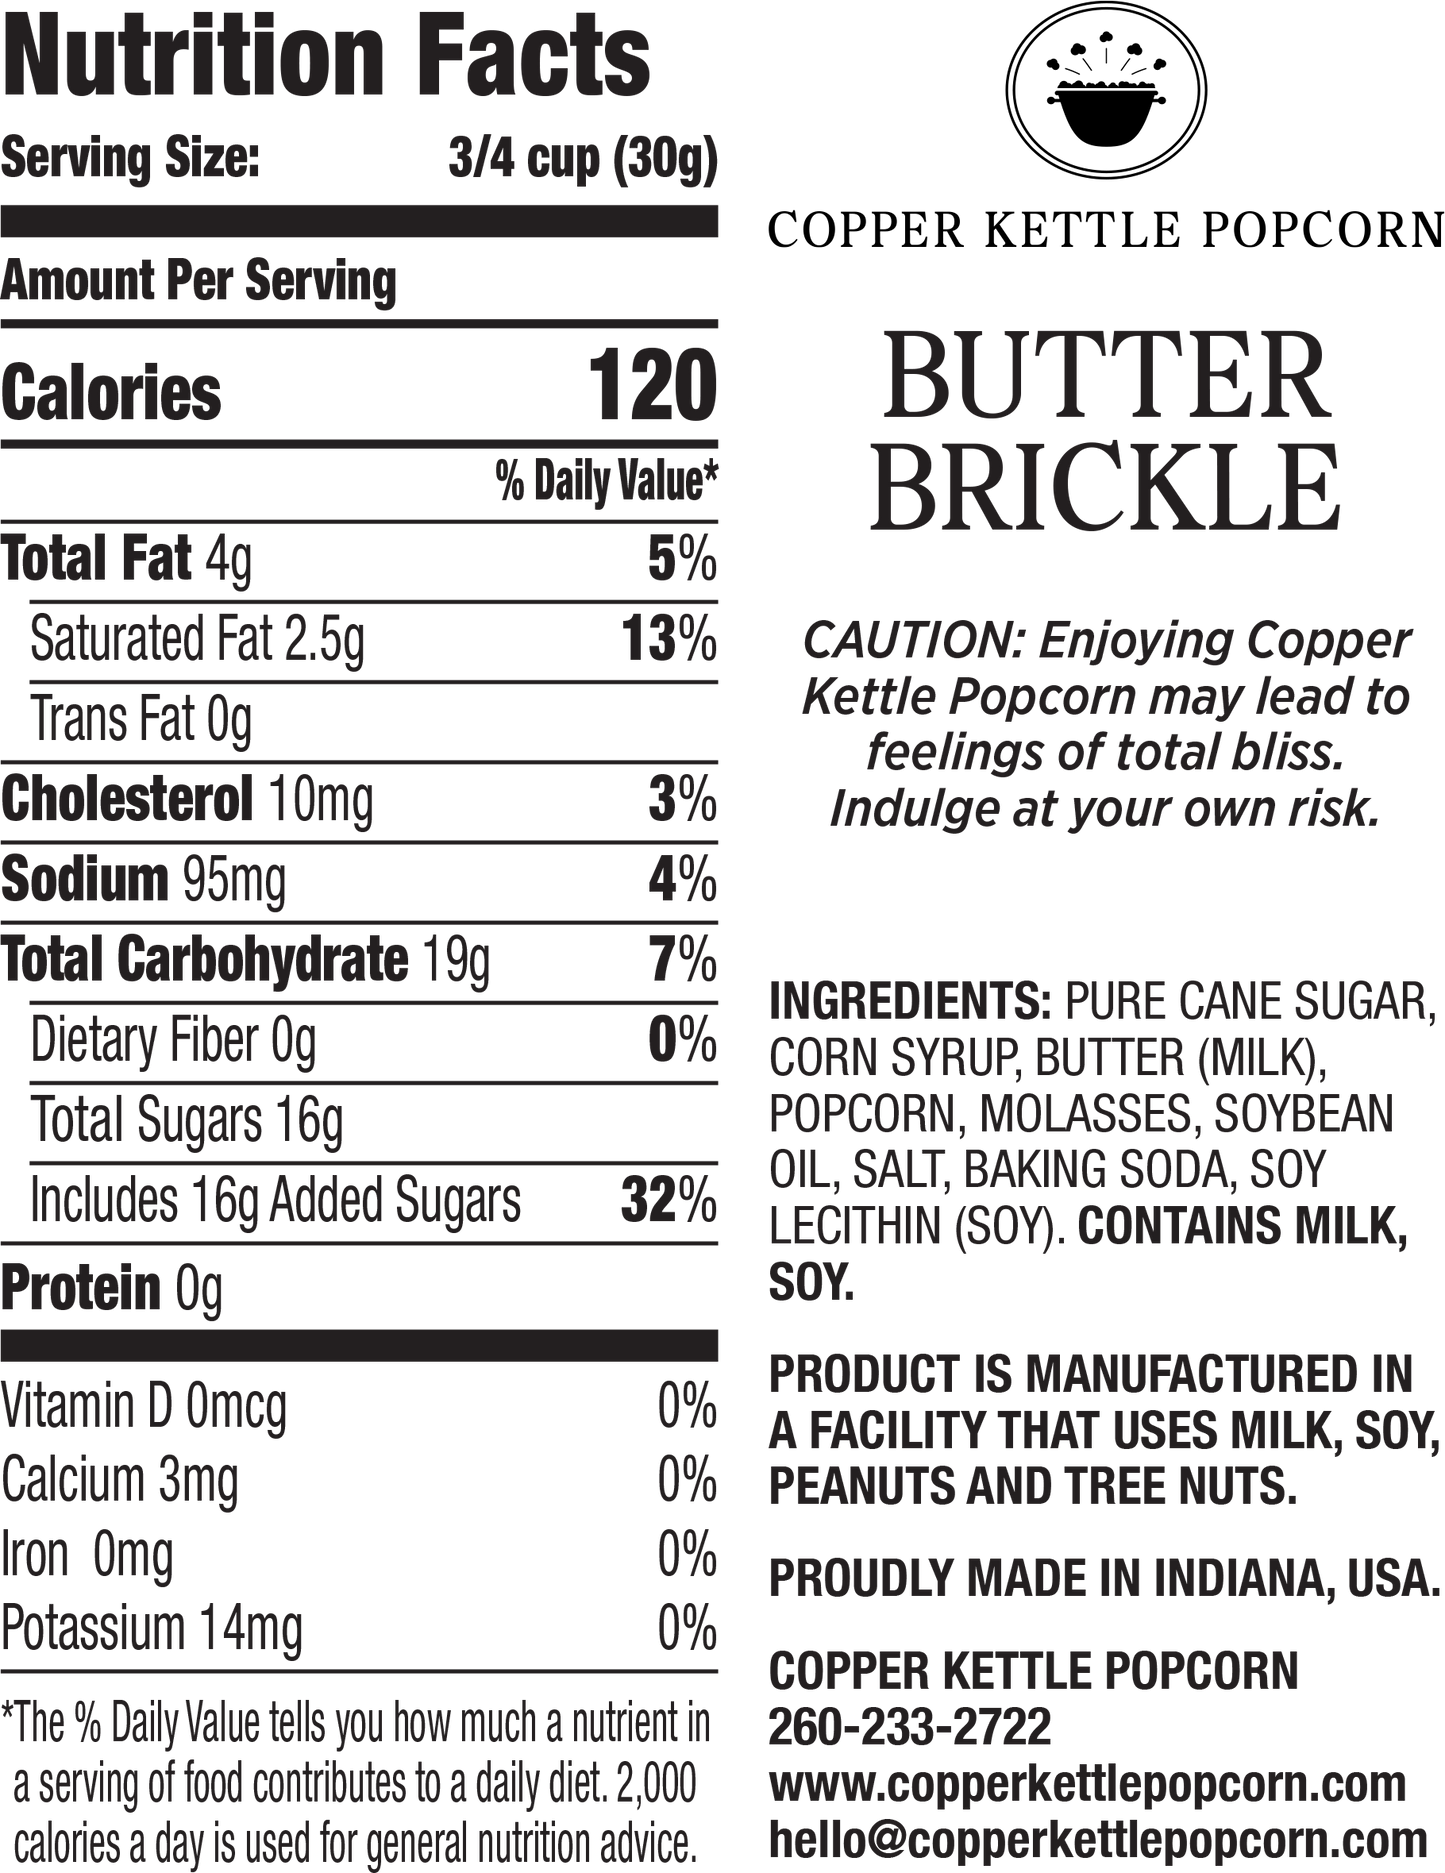 Butter Brickle Tub - 22 Servings